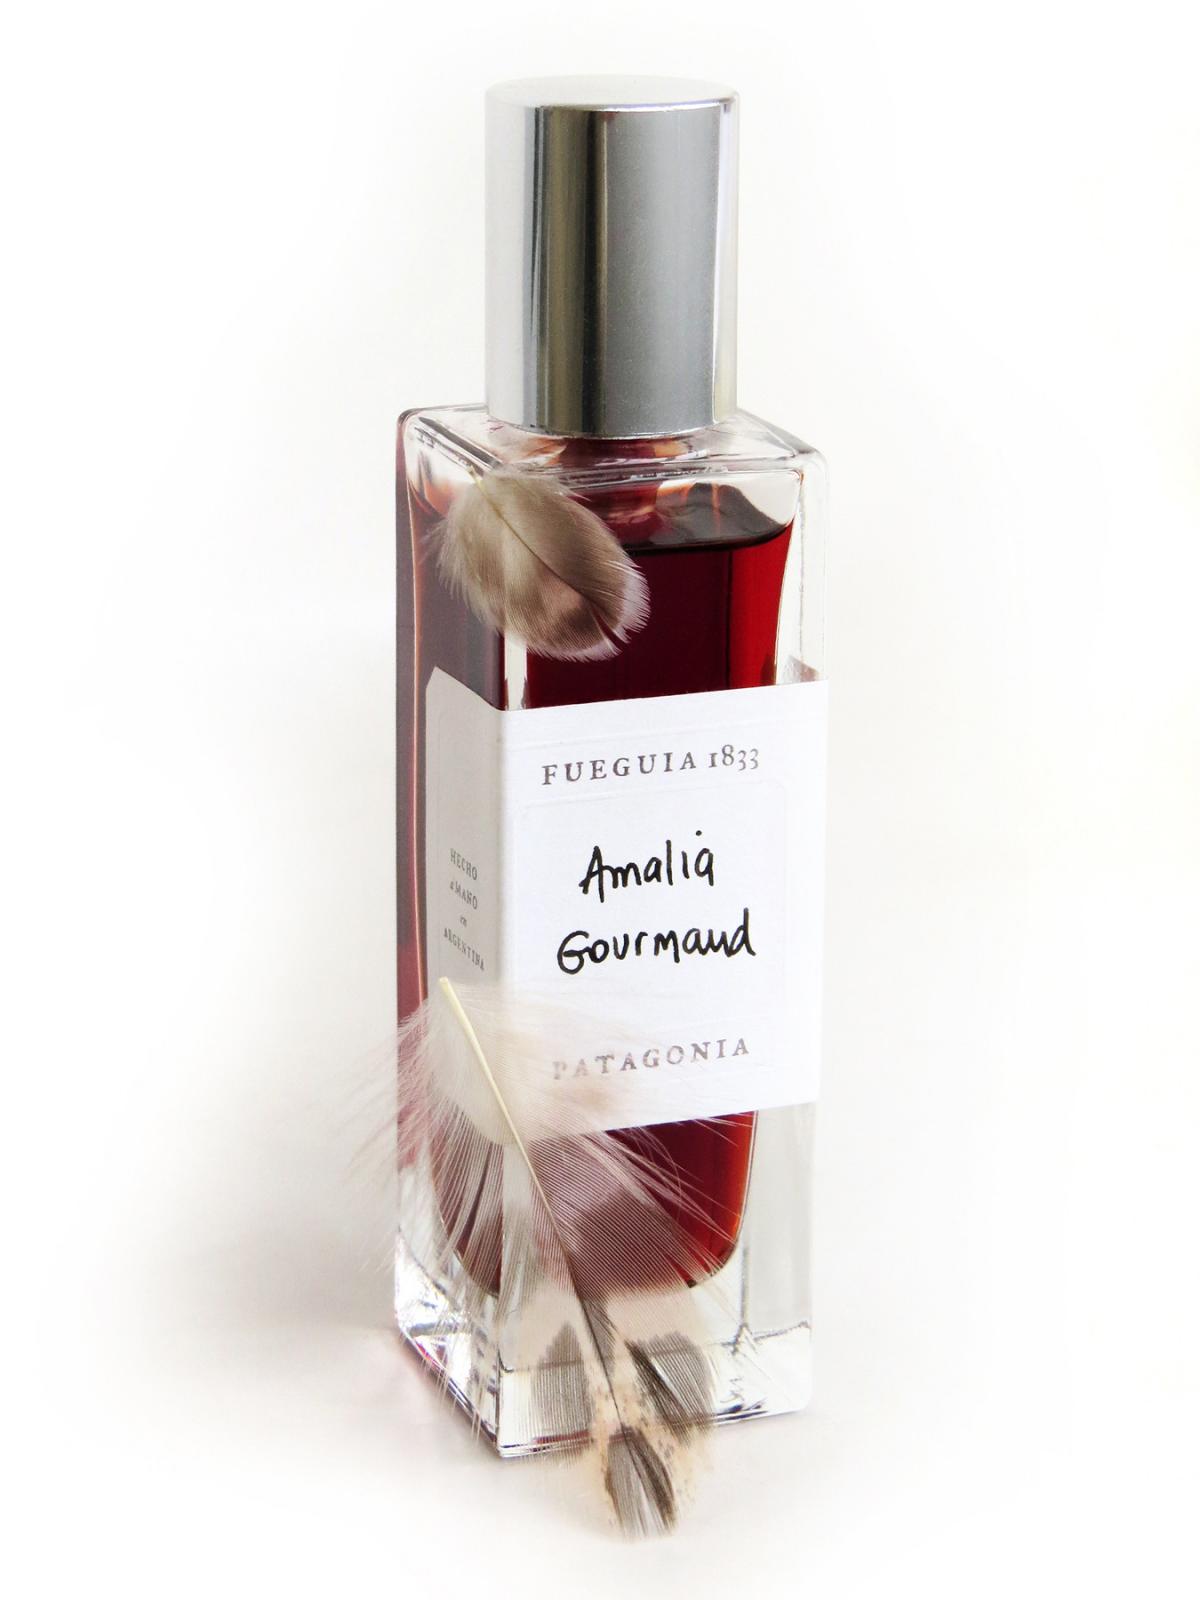 Amalia Gourmand Fueguia 1833 perfume - a fragrance for women and men